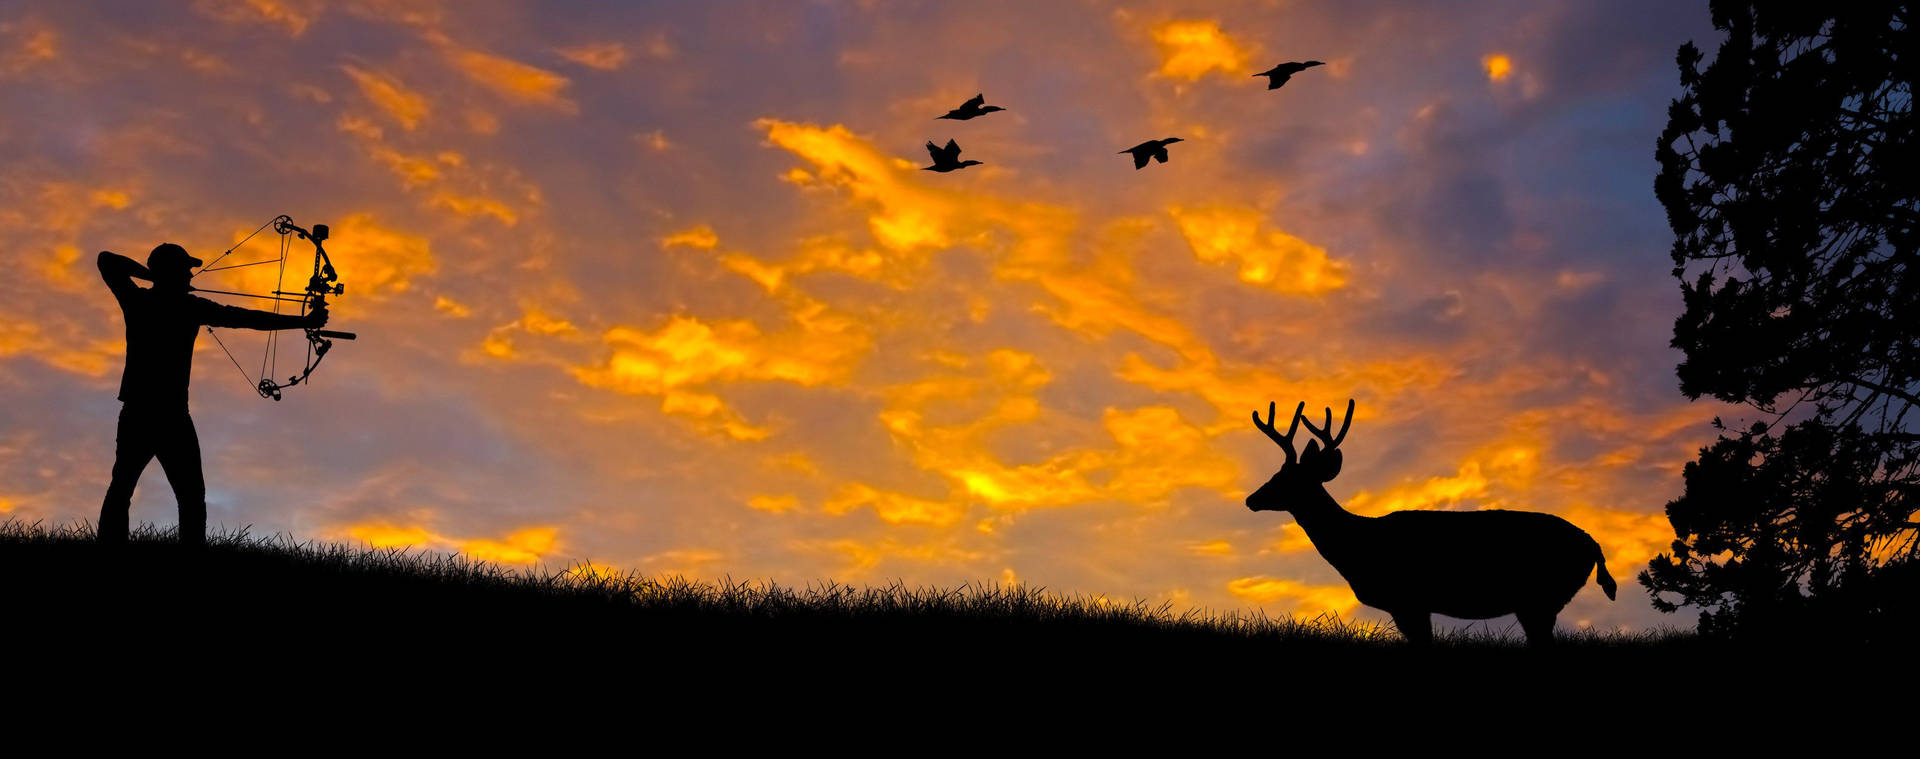 Silhouette Sunset Elk Hunting